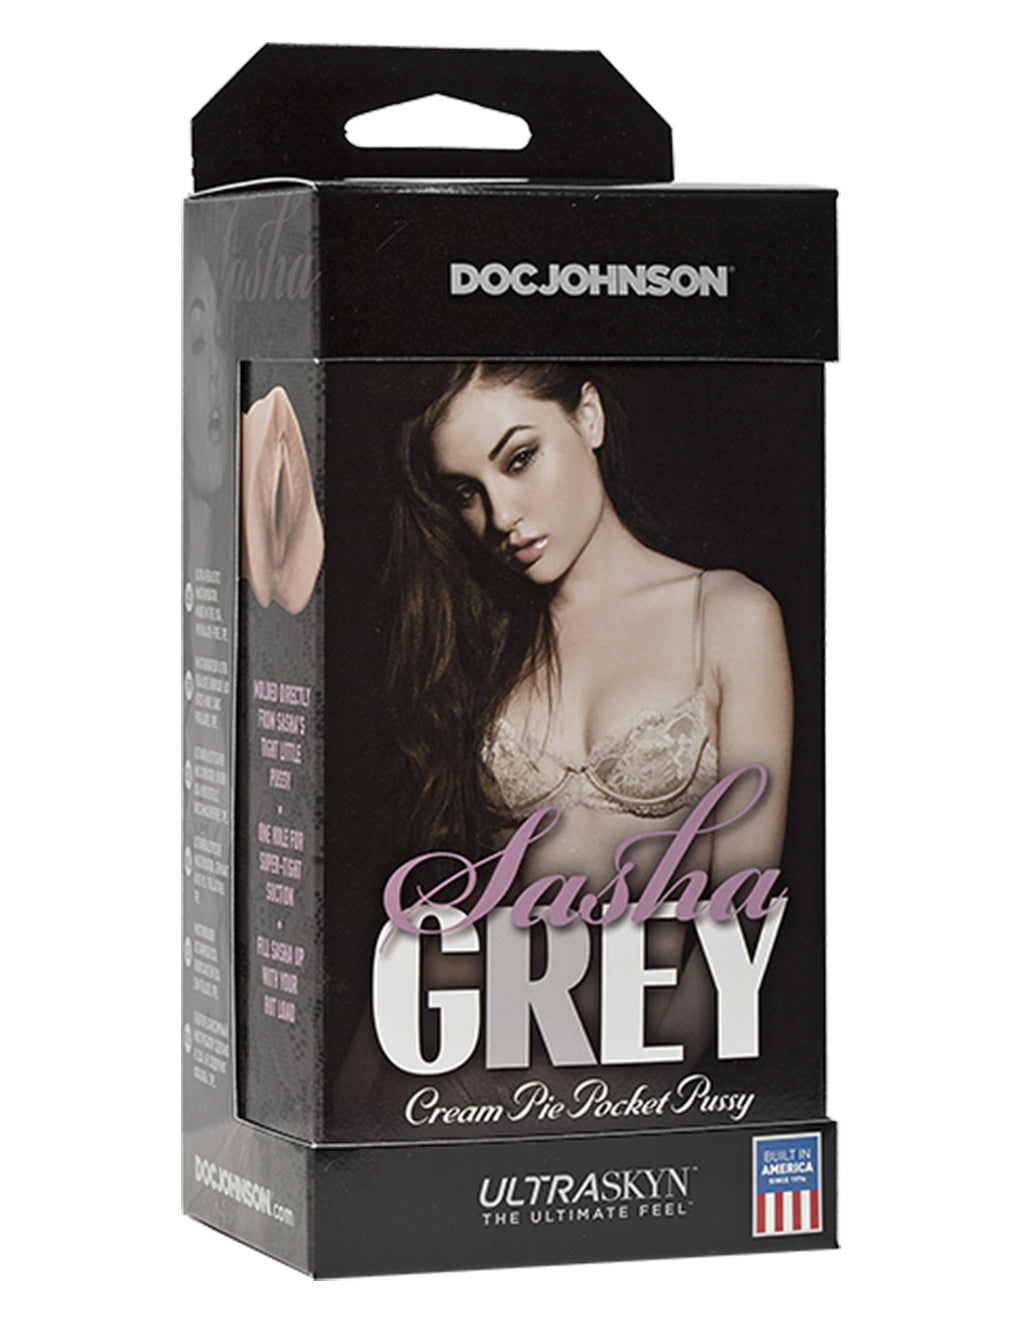 Sasha Grey by Doc Johnson Ultraskyn Cream Pie Pocket Pussy package